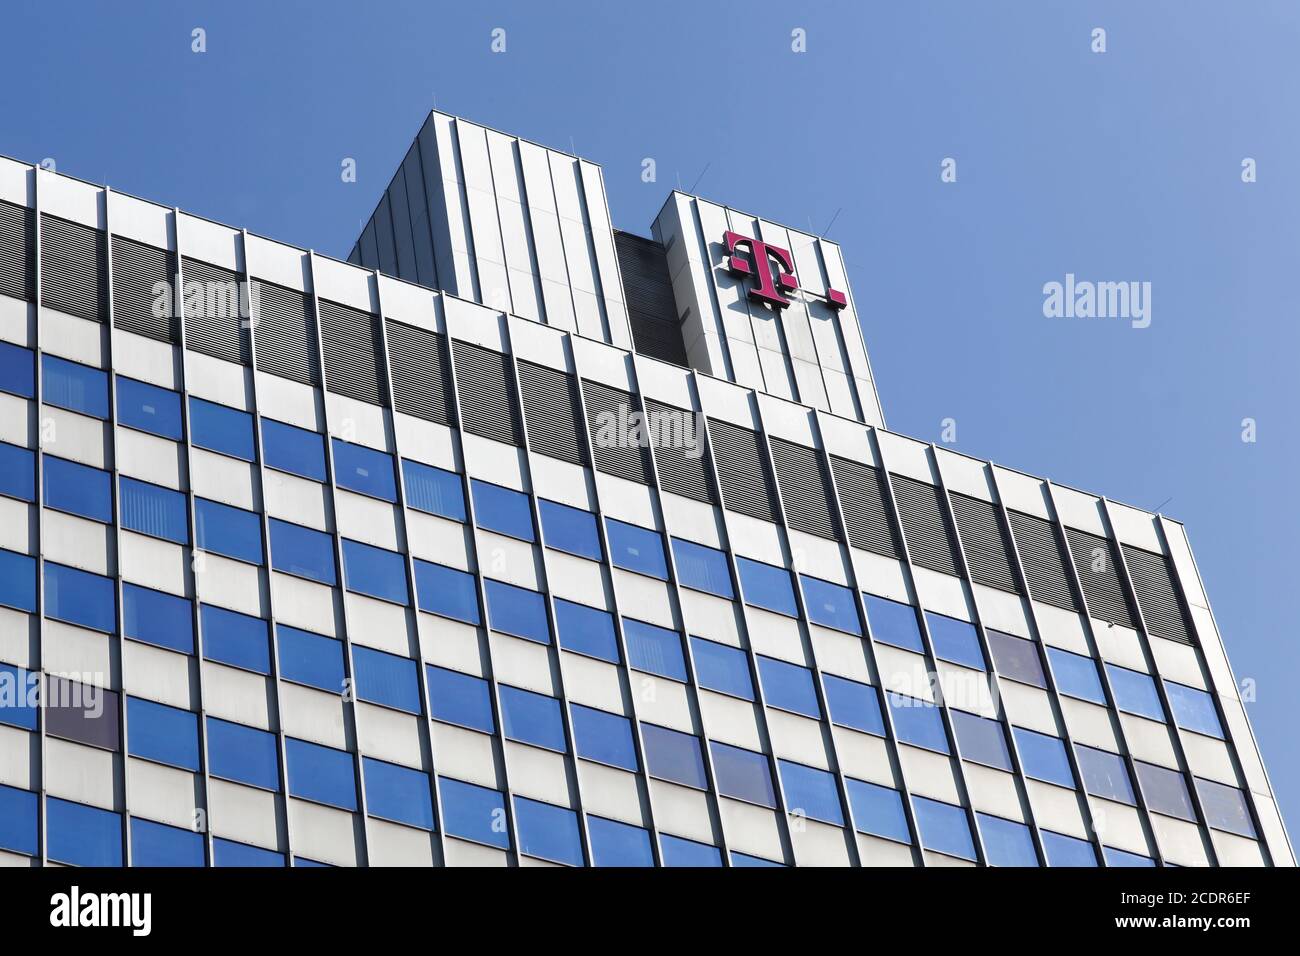 Cologne, Germany - September 2, 2018: Deutsche Telekom building and office in Cologne. Deutsche Telekom is a German telecommunications company Stock Photo